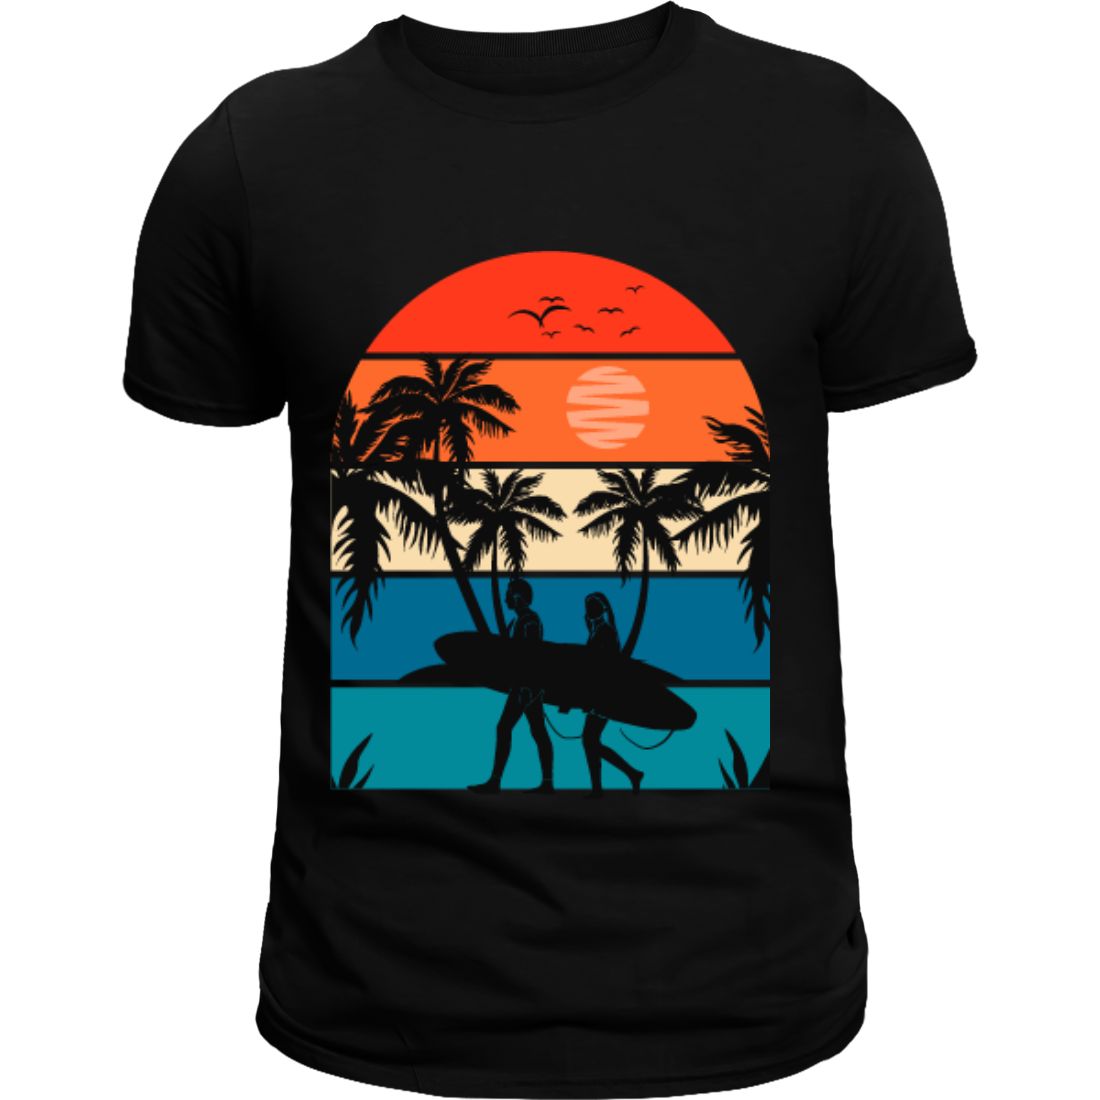 summer Beautiful T shirt design preview image.